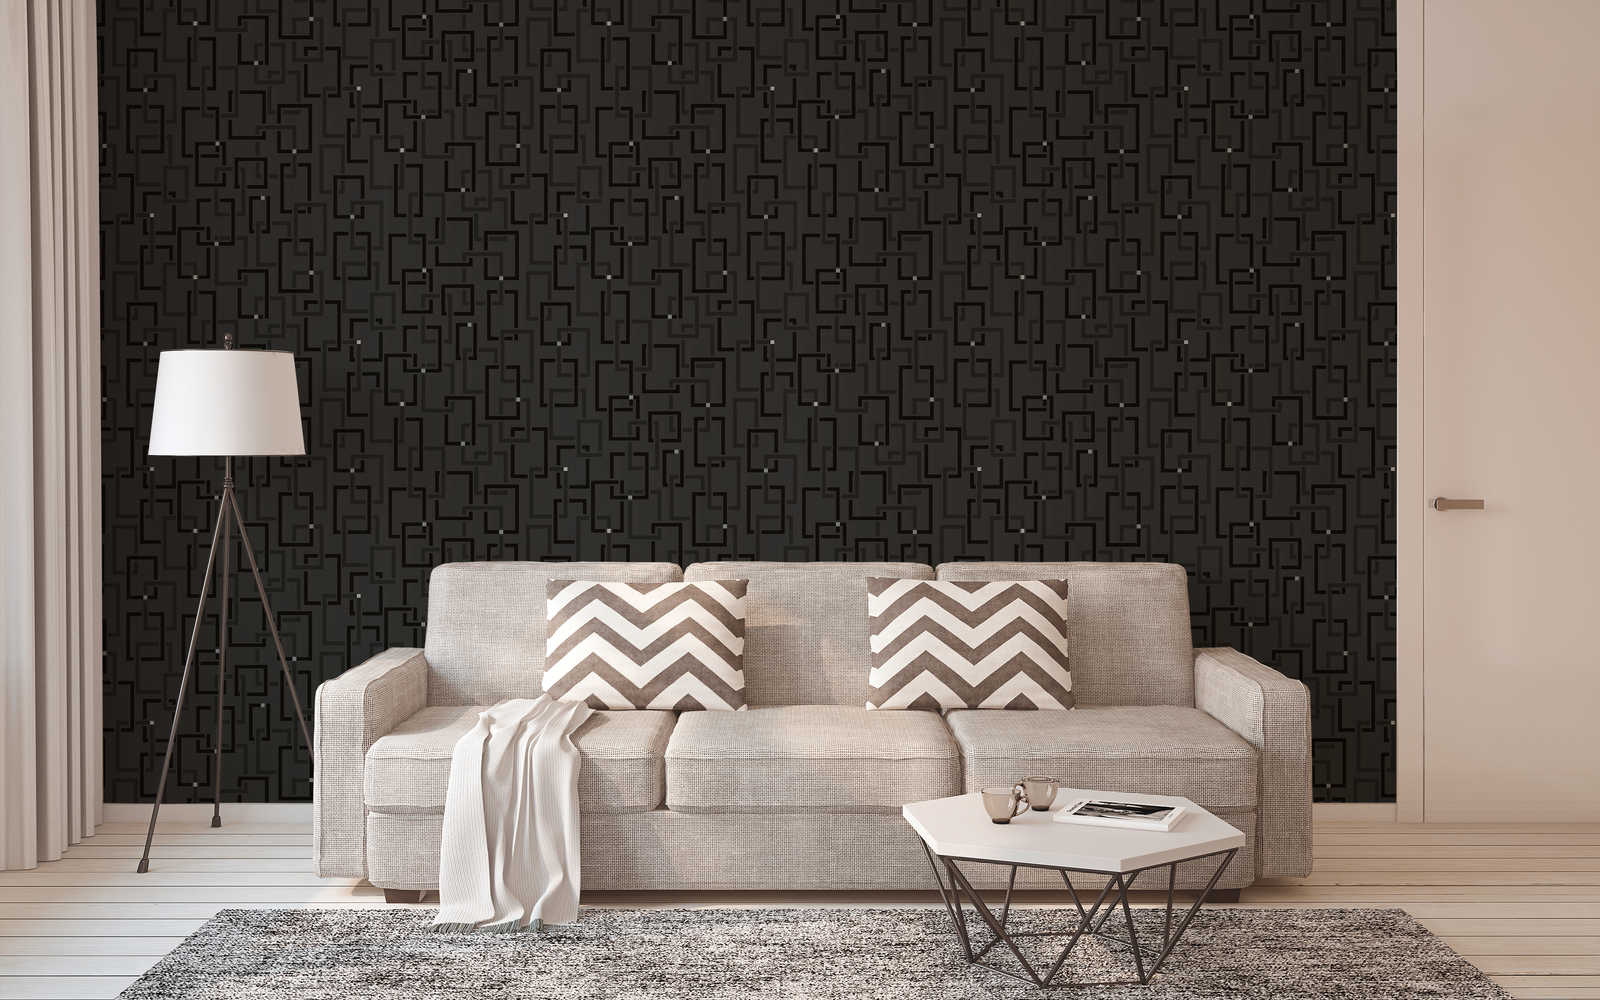             Design wallpaper retro style, pattern & 3D effect - black, silver
        